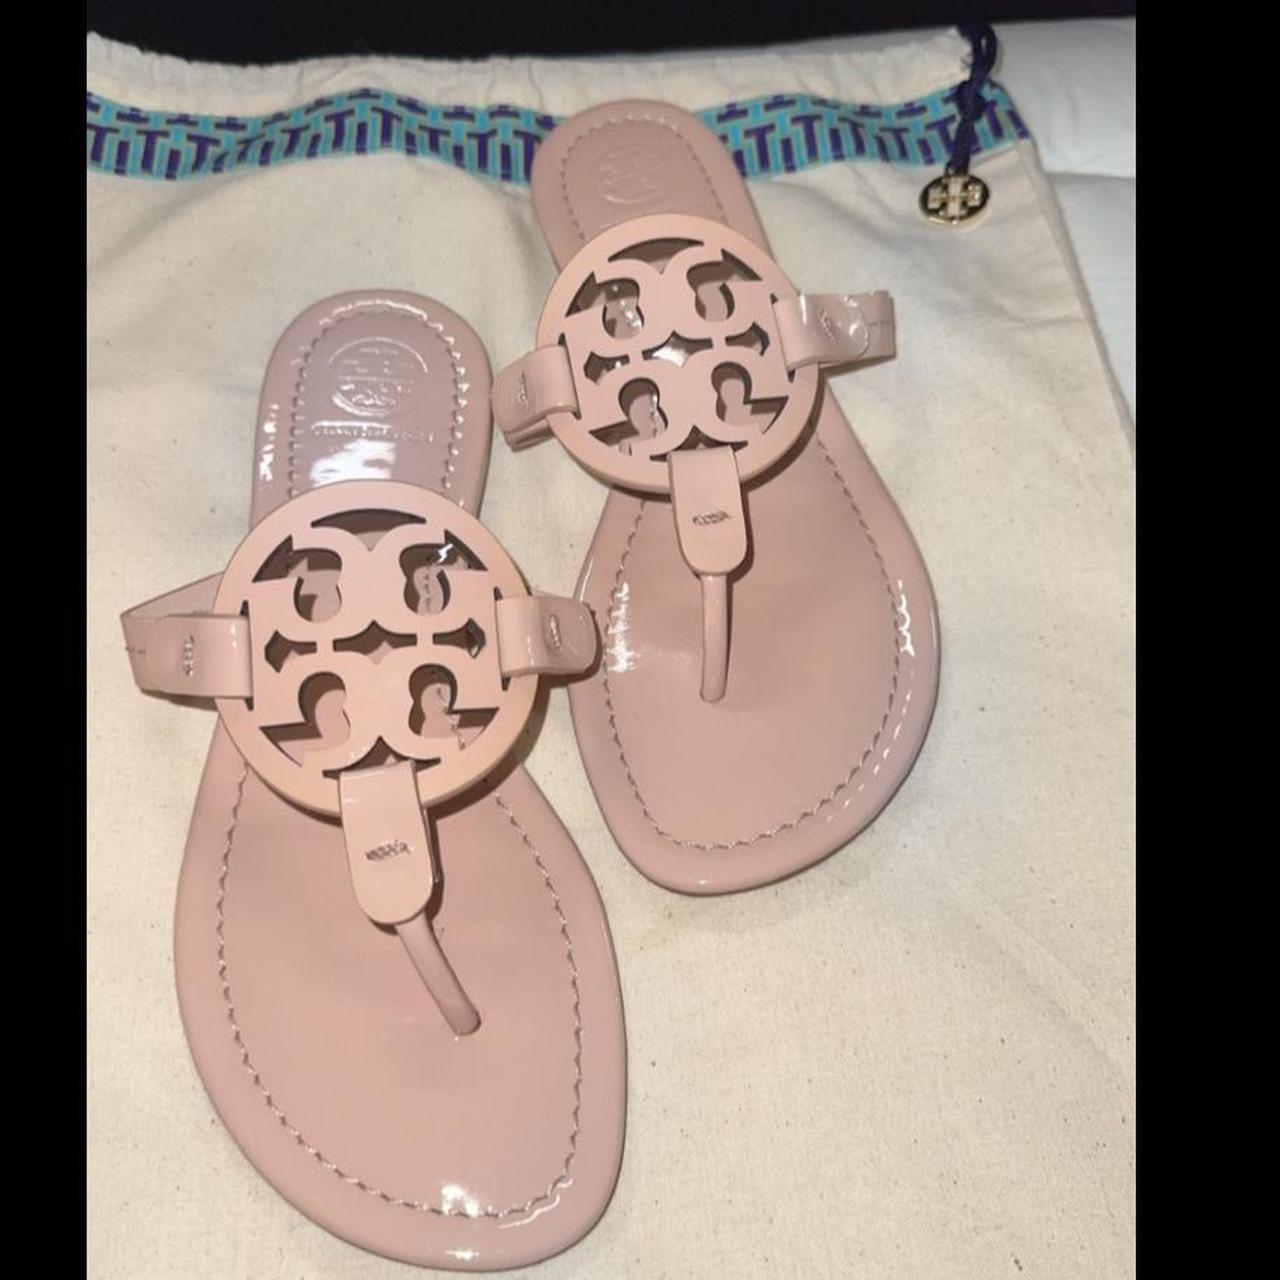 Tory Burch Women's Sandals - Tan - US 6.5